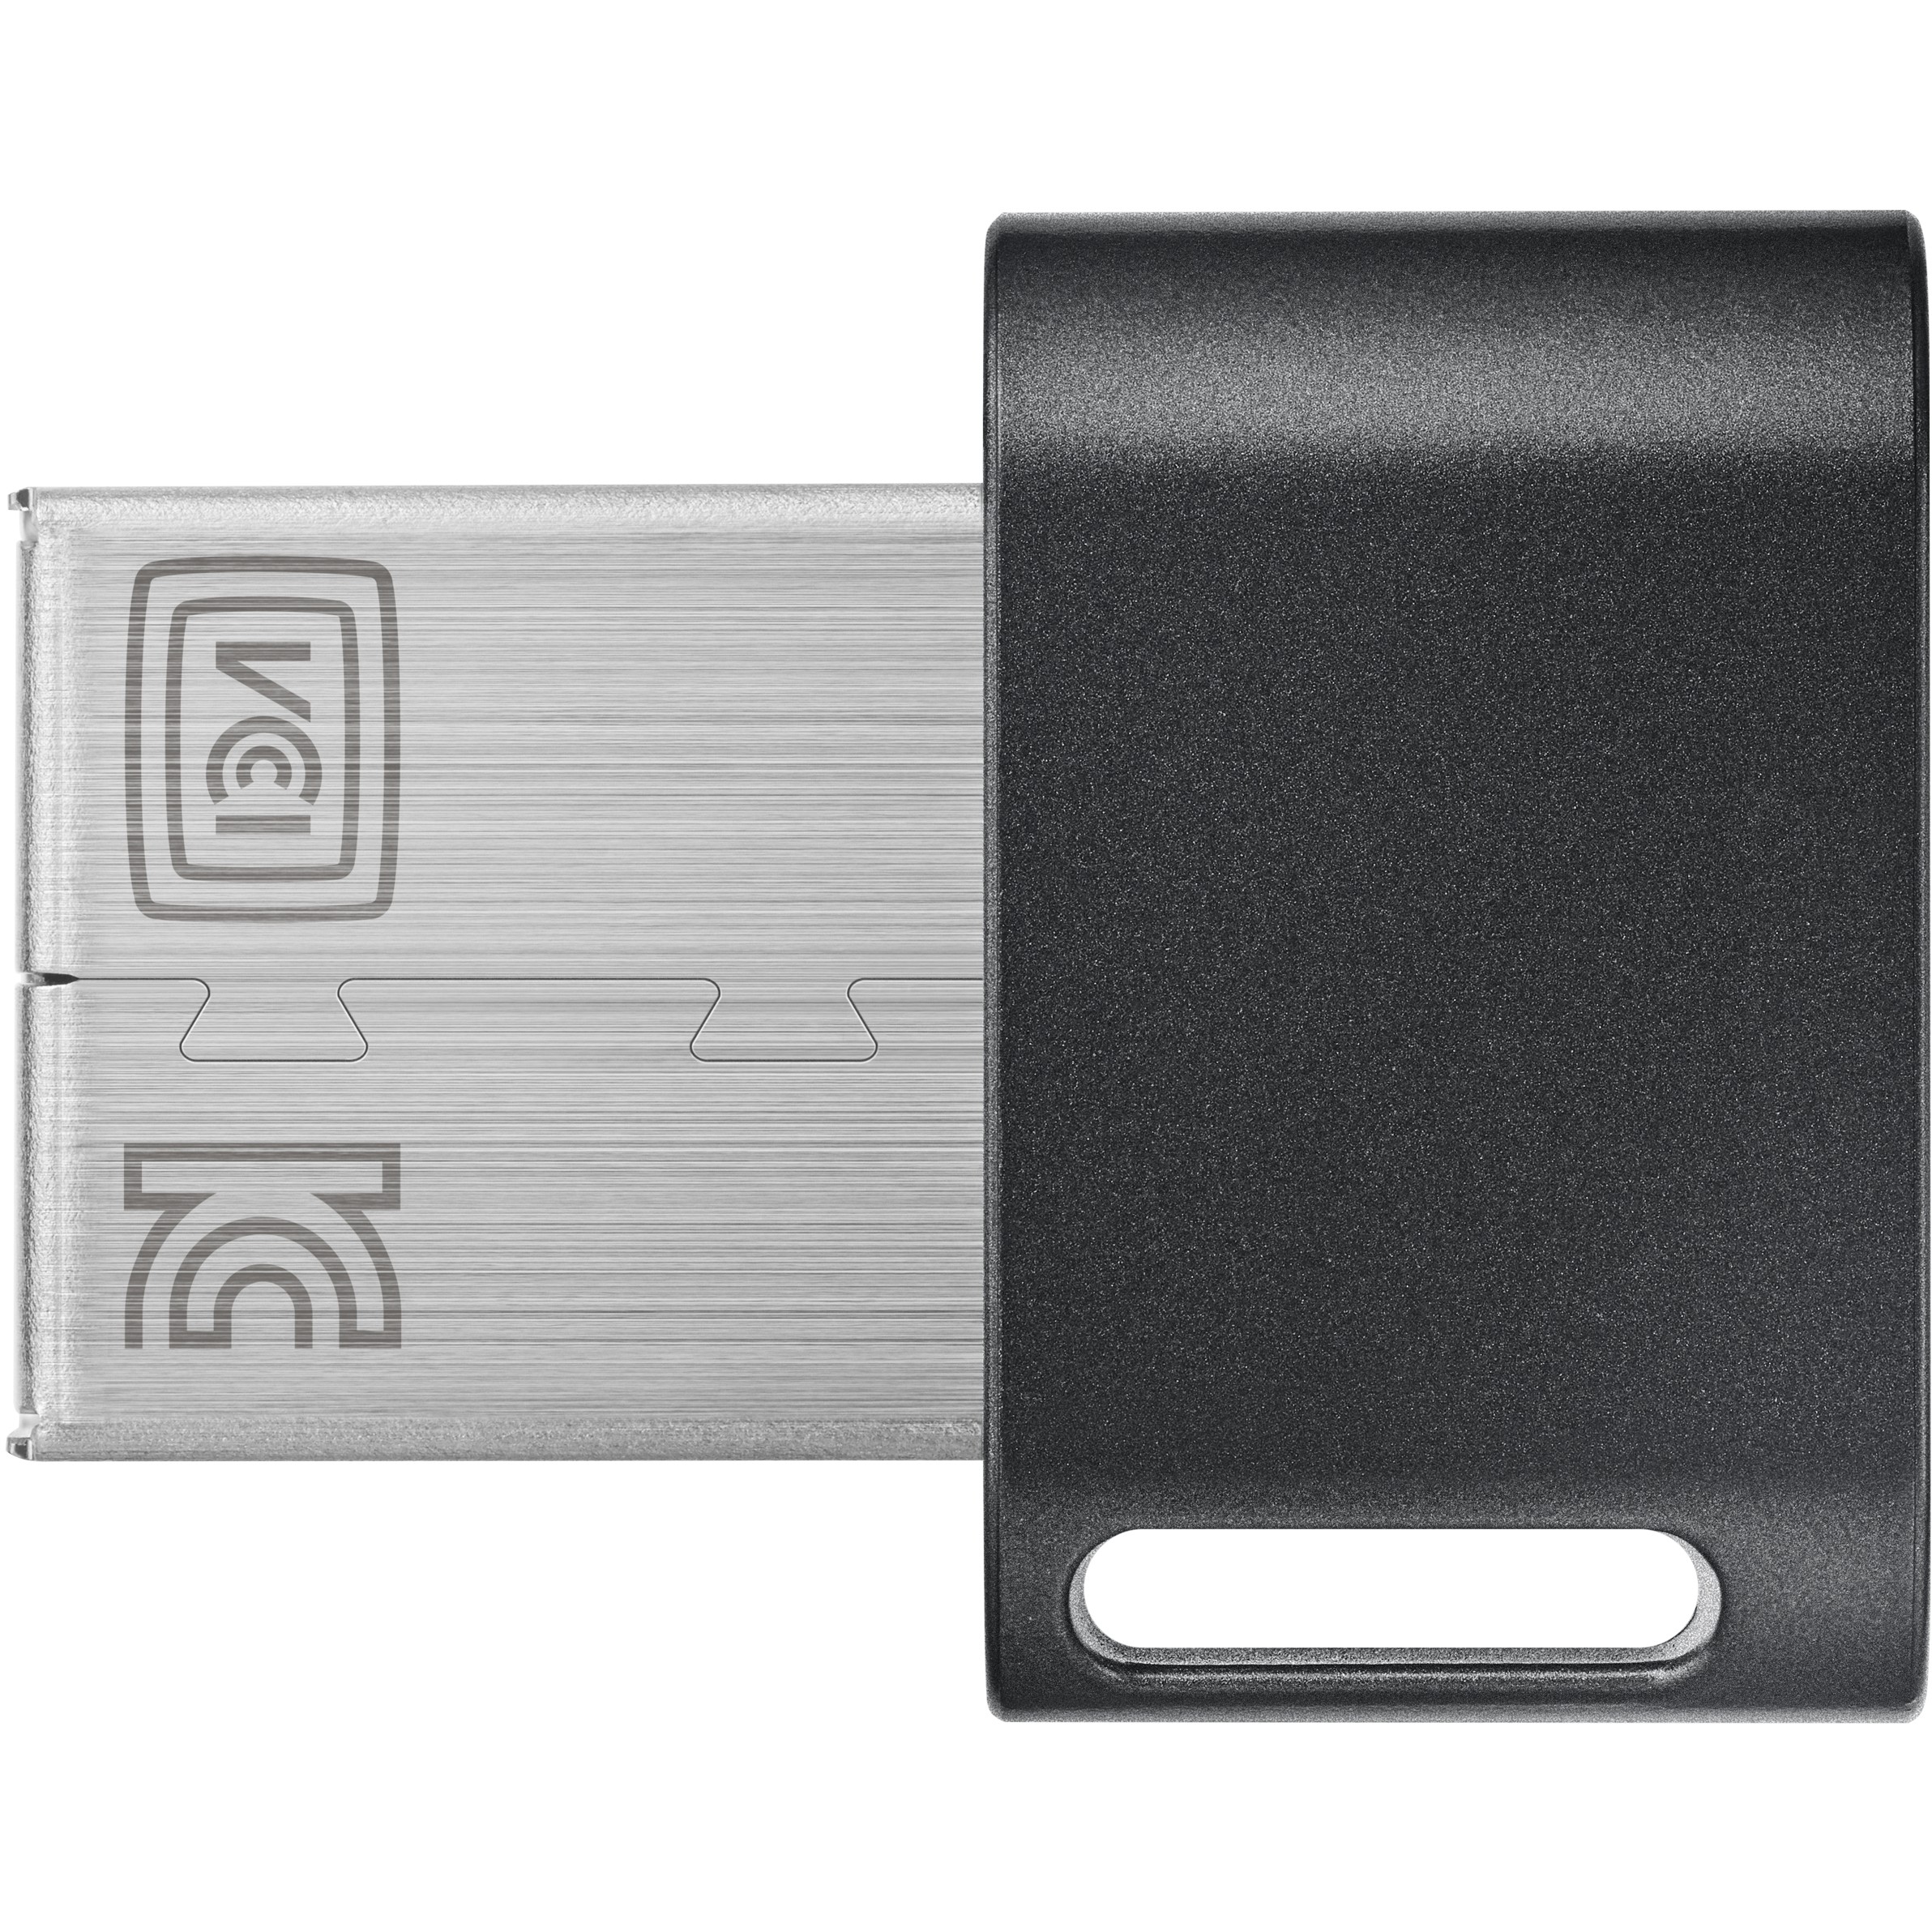 SAMSUNG MUF-64AB/APC, USB-Stick, Samsung MUF-64AB USB  (BILD2)